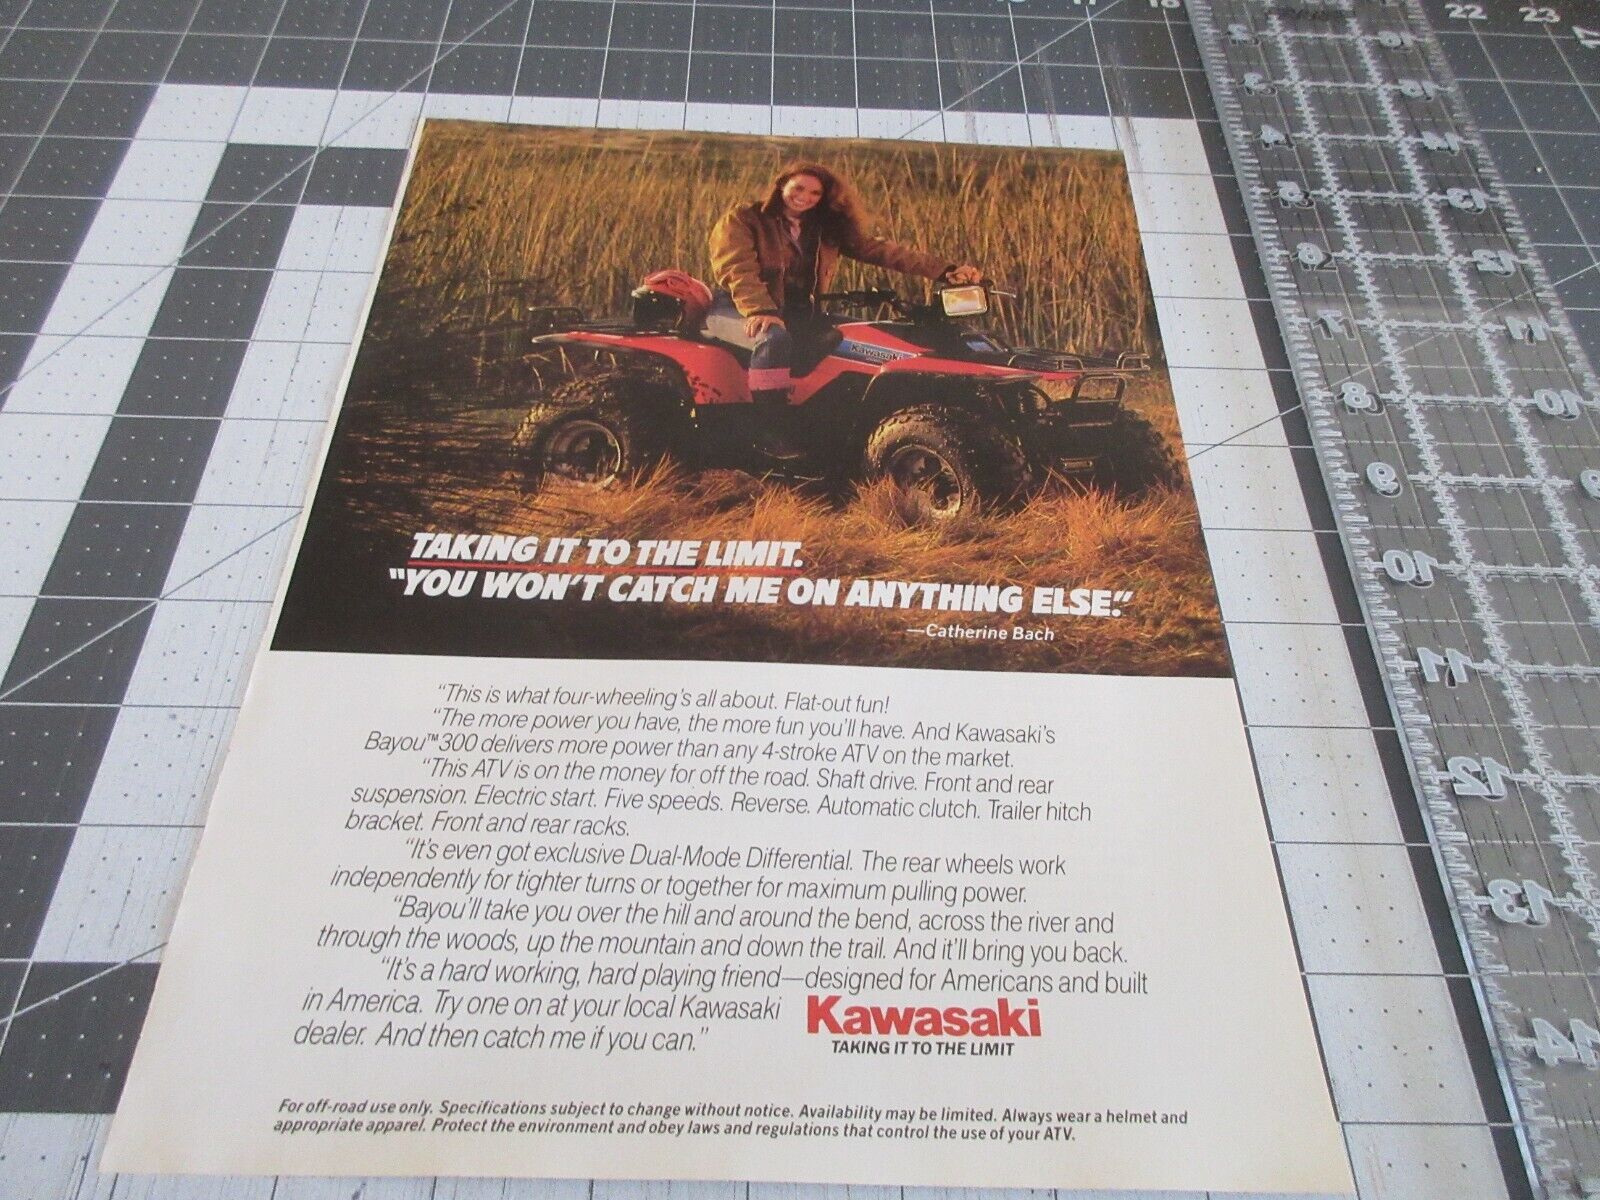 1985 Kawasaki Bayou 300 4-stroke, ATV Print Ad - Catherine Bach